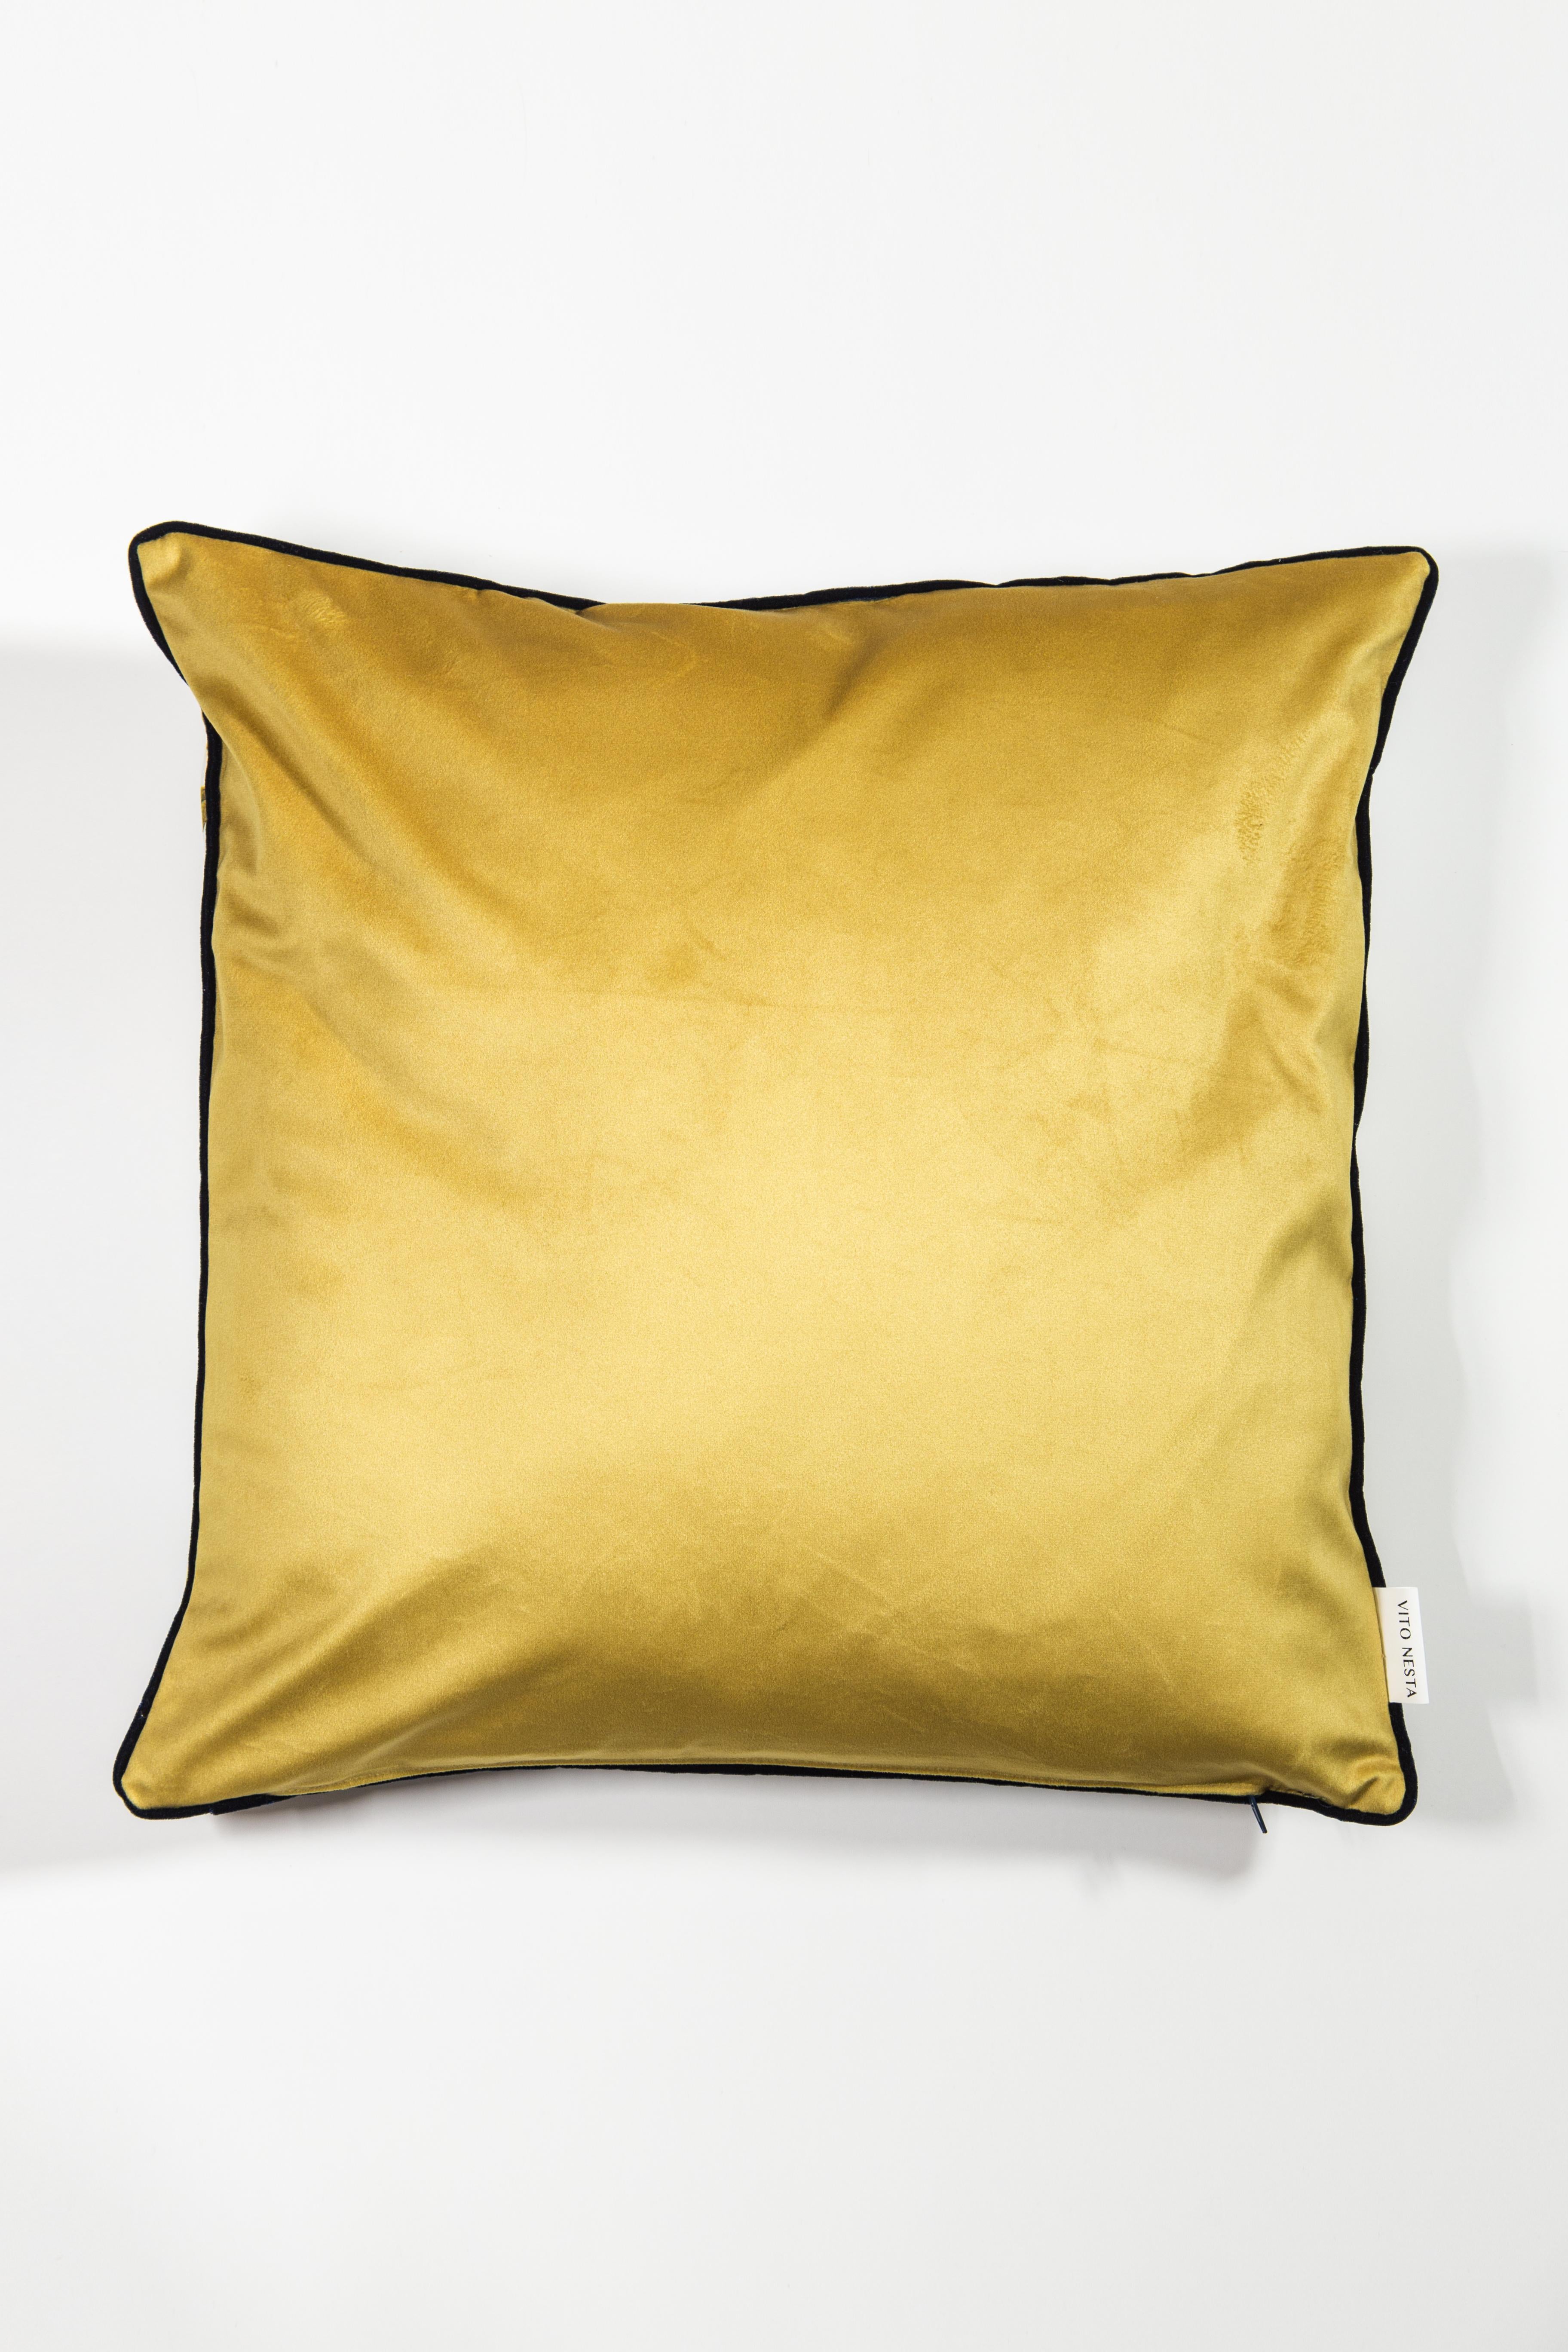 Las Palmas, Contemporary Velvet Printed Pillow by Vito Nesta For Sale 4